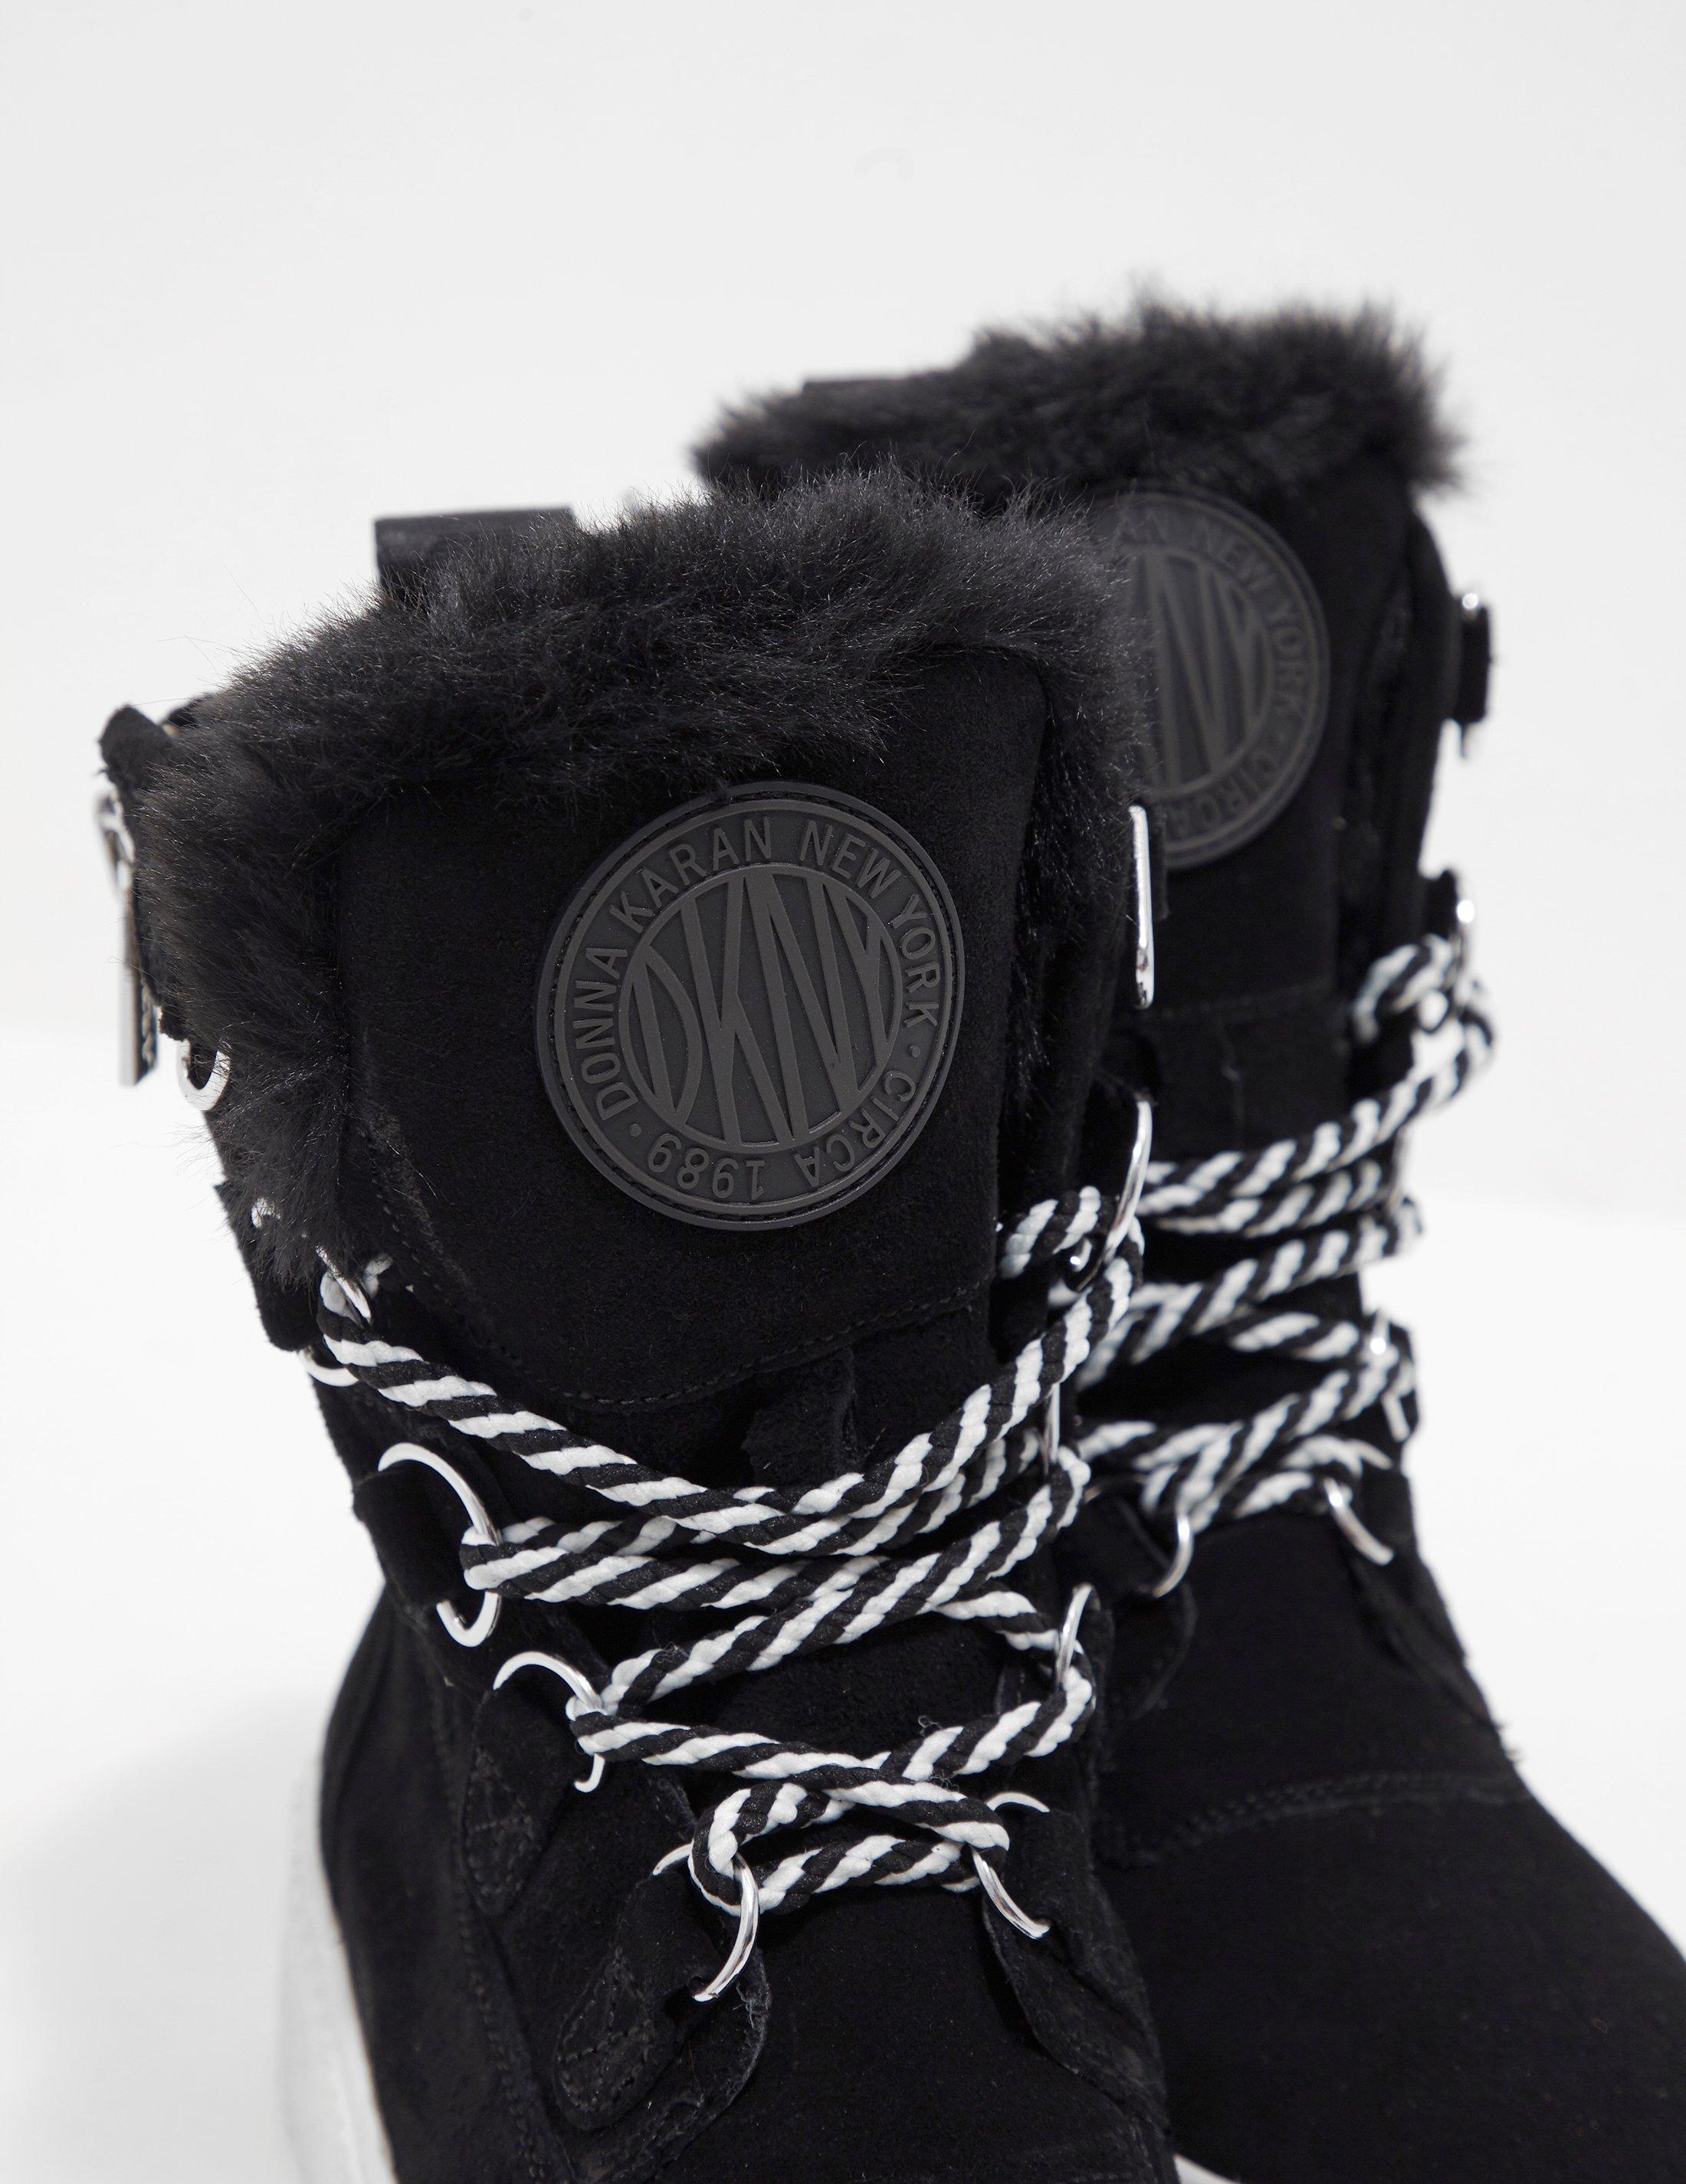 dkny snow boots